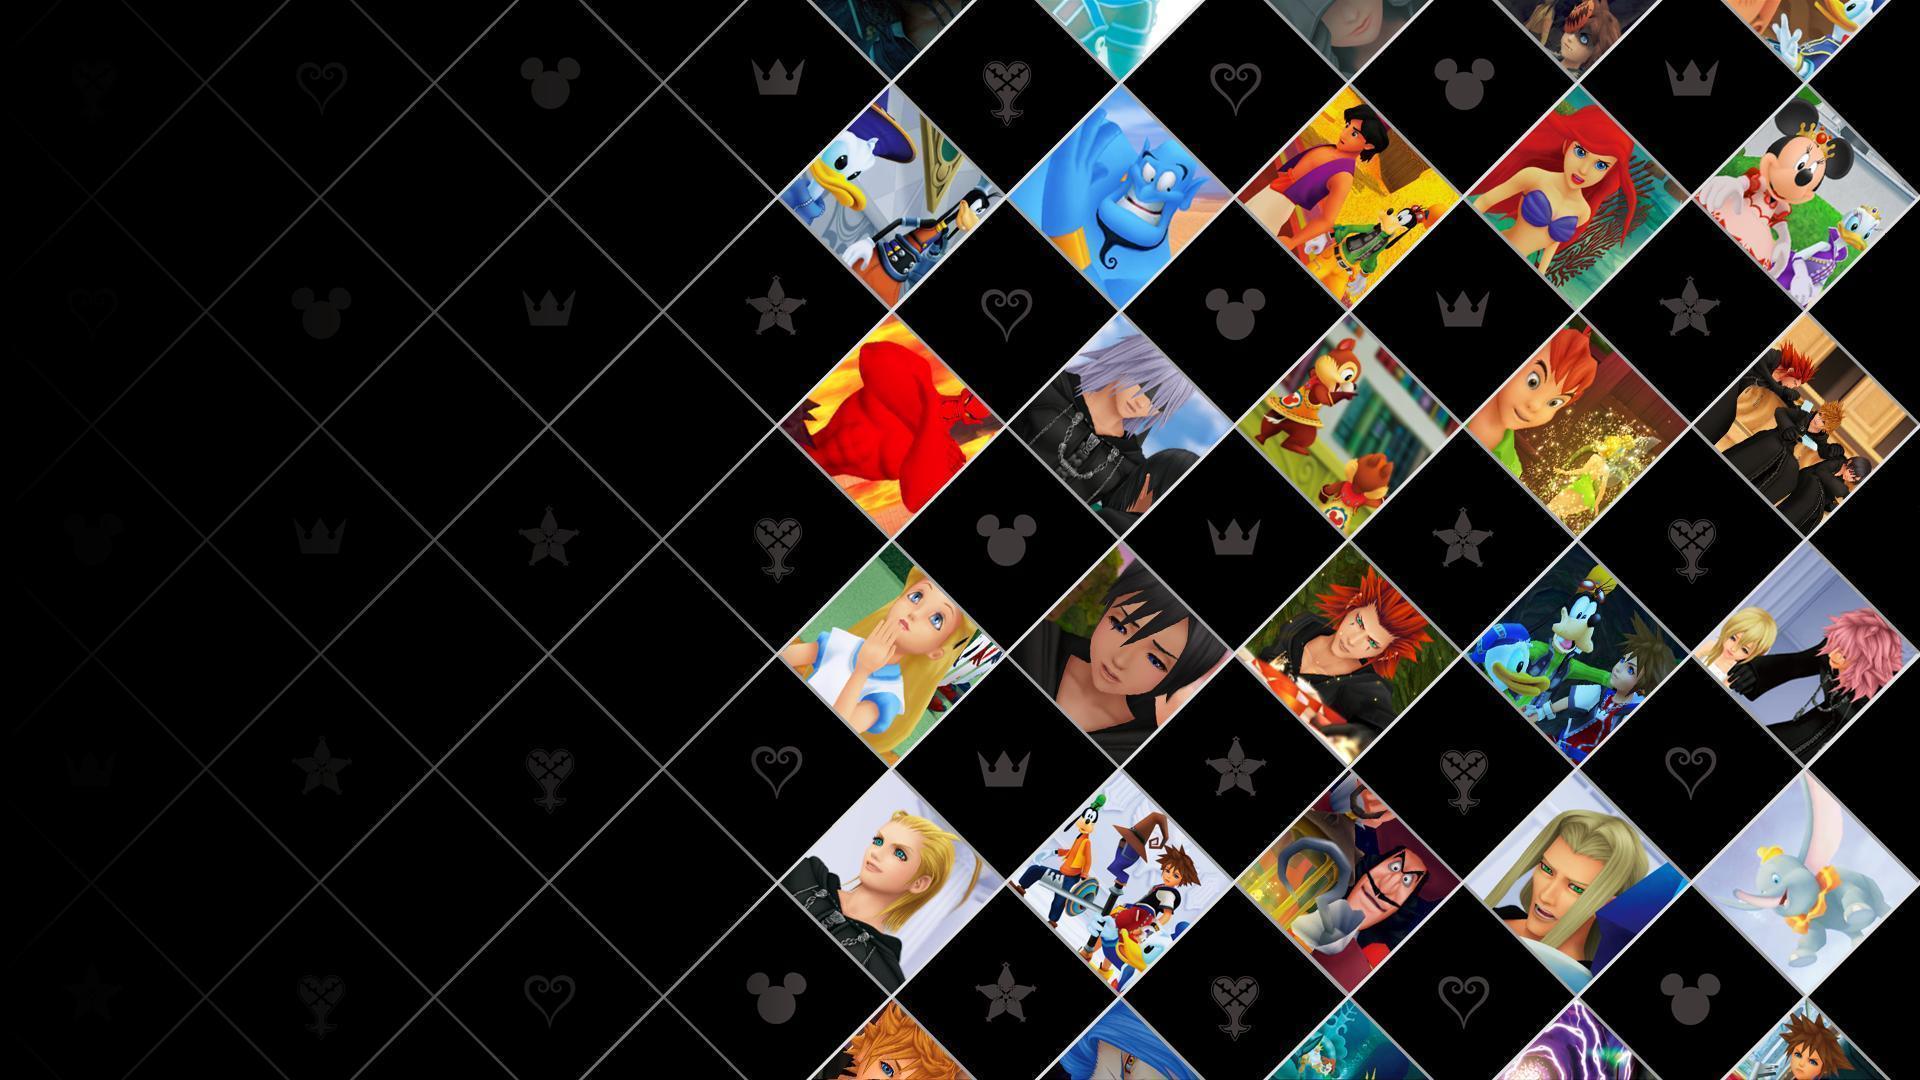 Direct capture of Kingdom Hearts HD 2.5 ReMIX&;s XMB screen